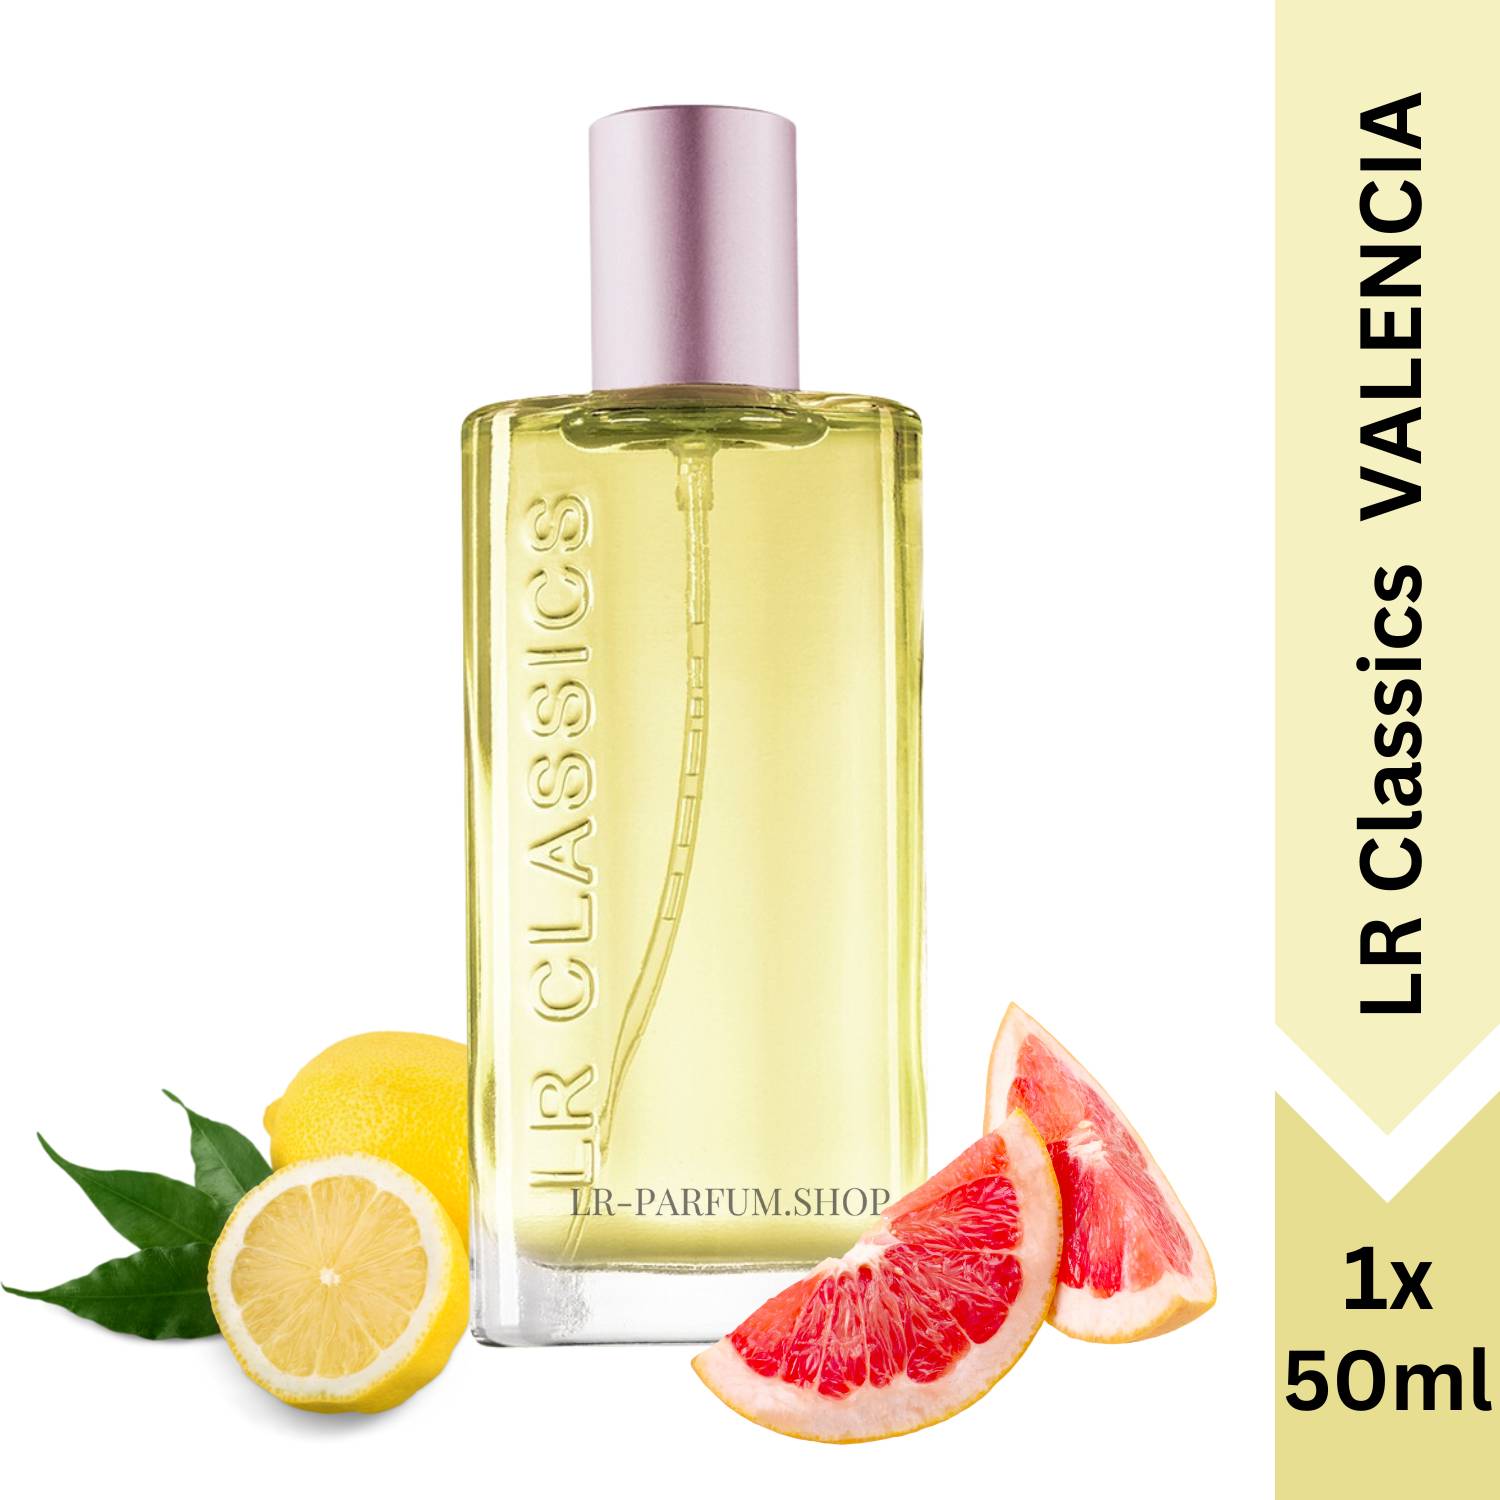 LR Classics Valencia - Eau de Parfum 50ml - LR-Parfum.shop